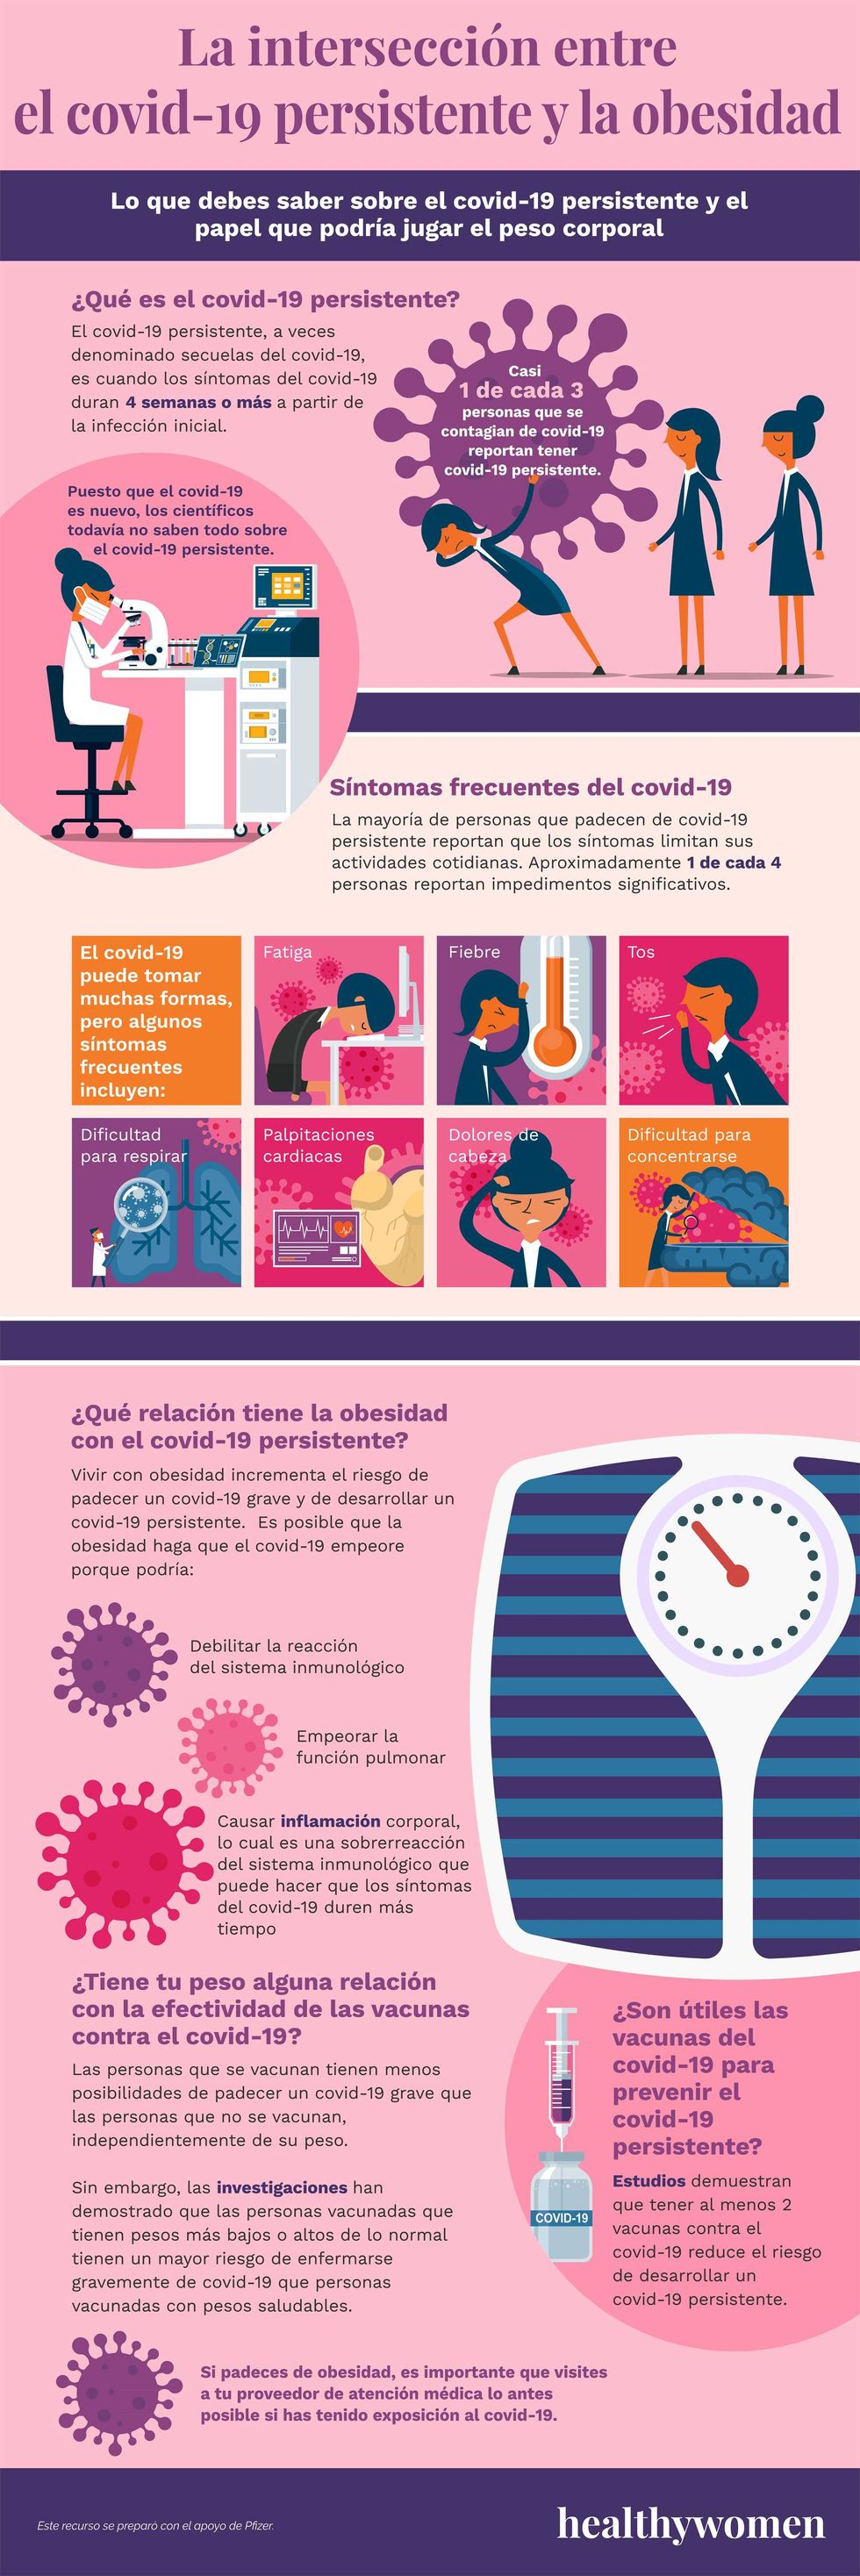 Infographic La intersecci\u00f3n entre el covid-19 persistente y la obesidad. Click the image to open the PDF